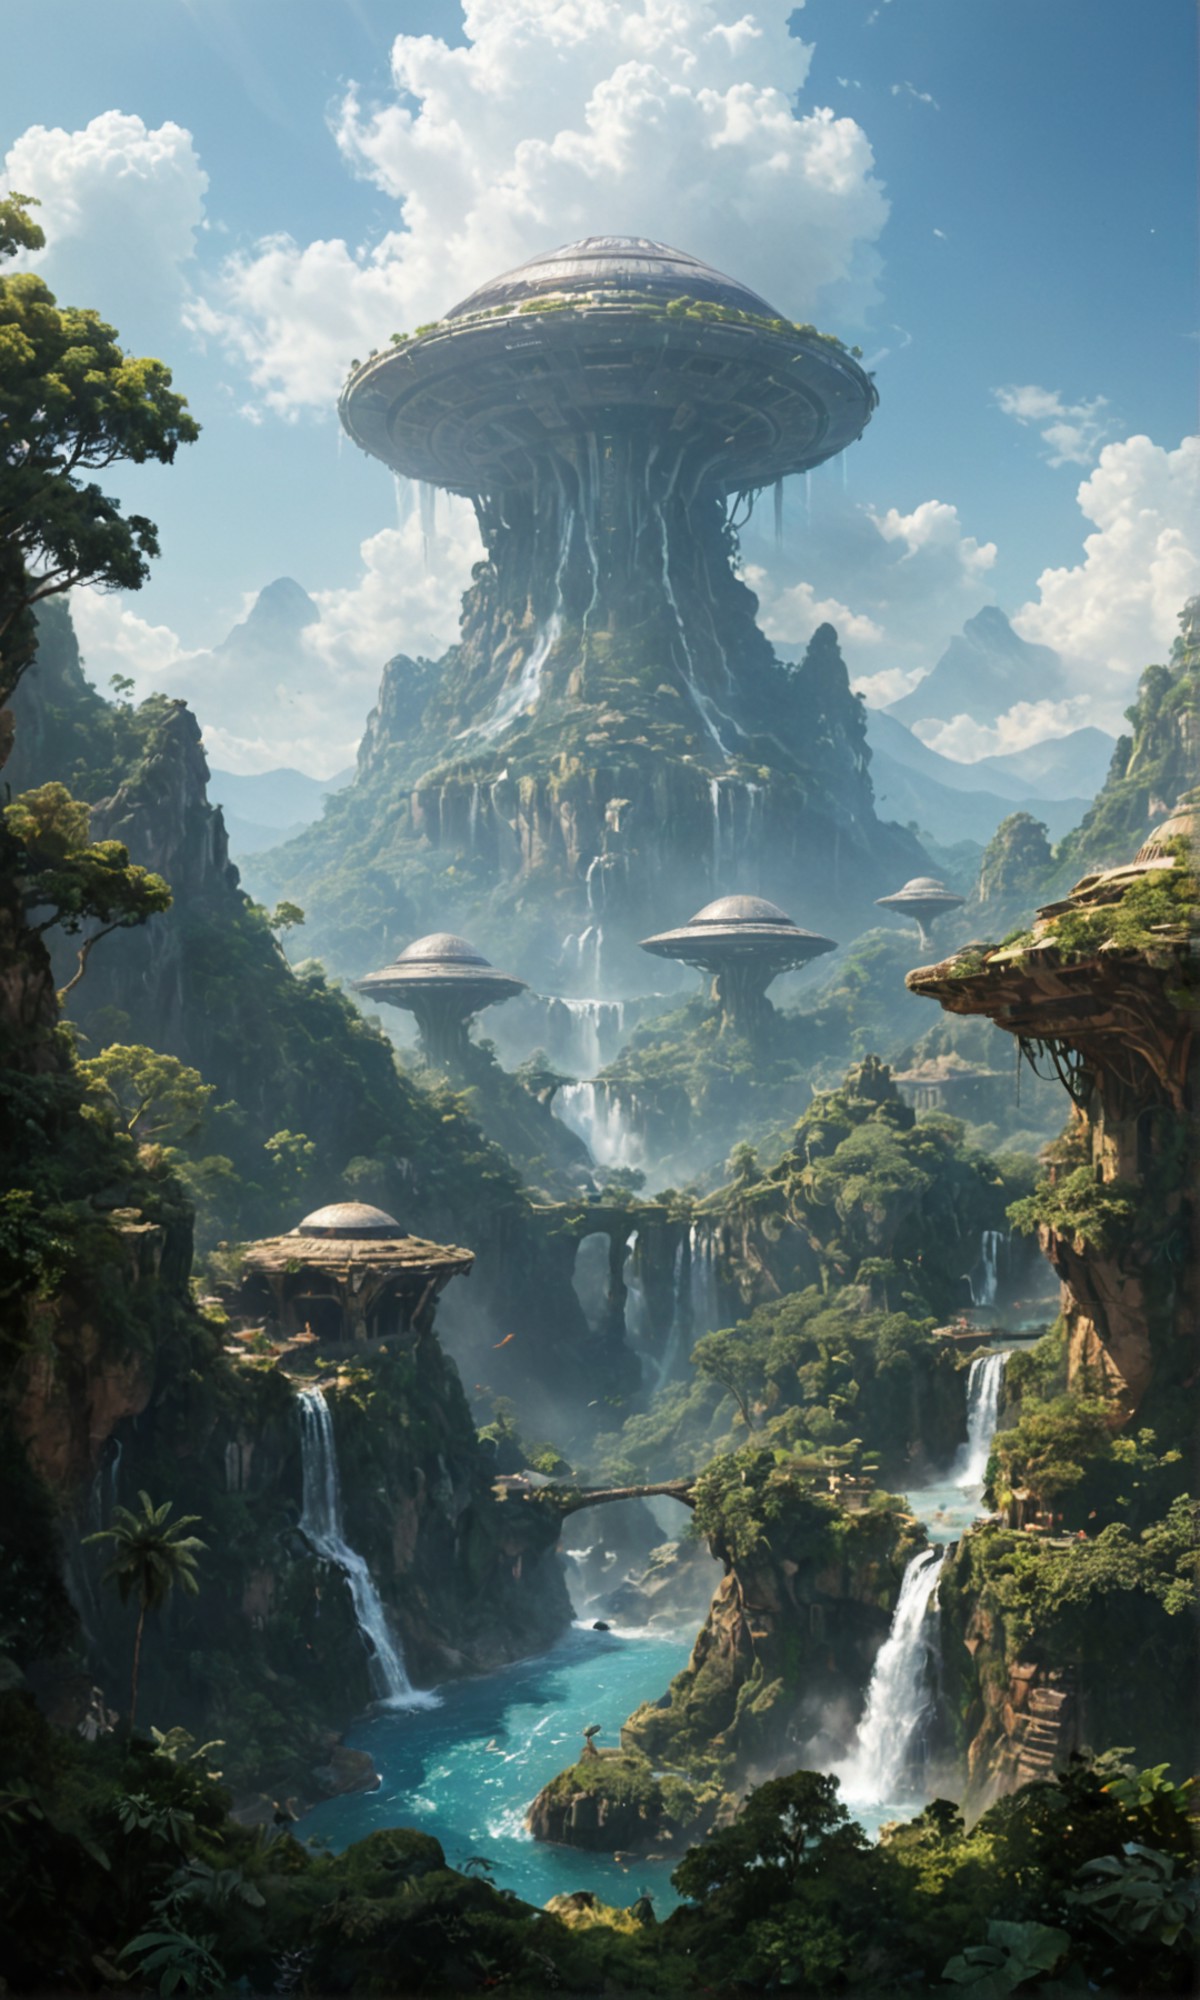 sinsearlly, beatiful view, jungle-mountain-sky,bright,sun, UFO,alien tech,giant arhcitecture,mistery, scifi-ancient temple...